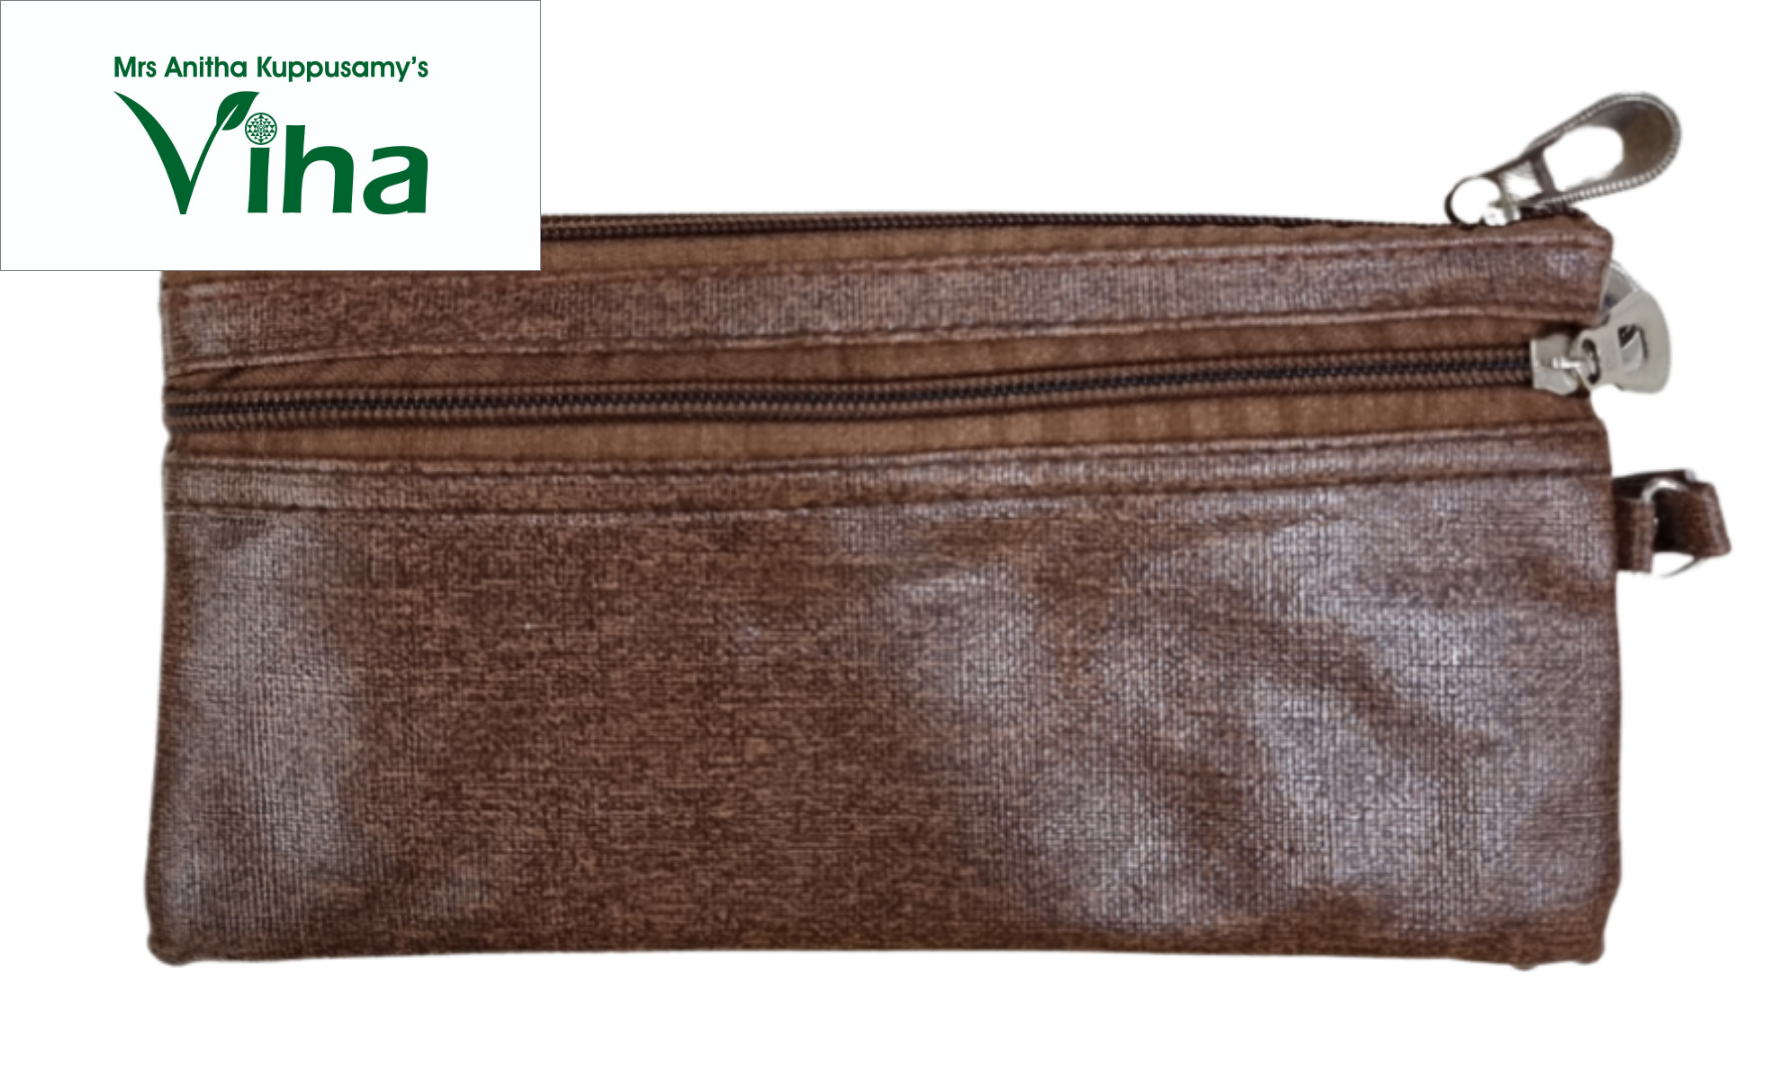 Genuine Leather Brown Relic Brand Purse Handbag | eBay